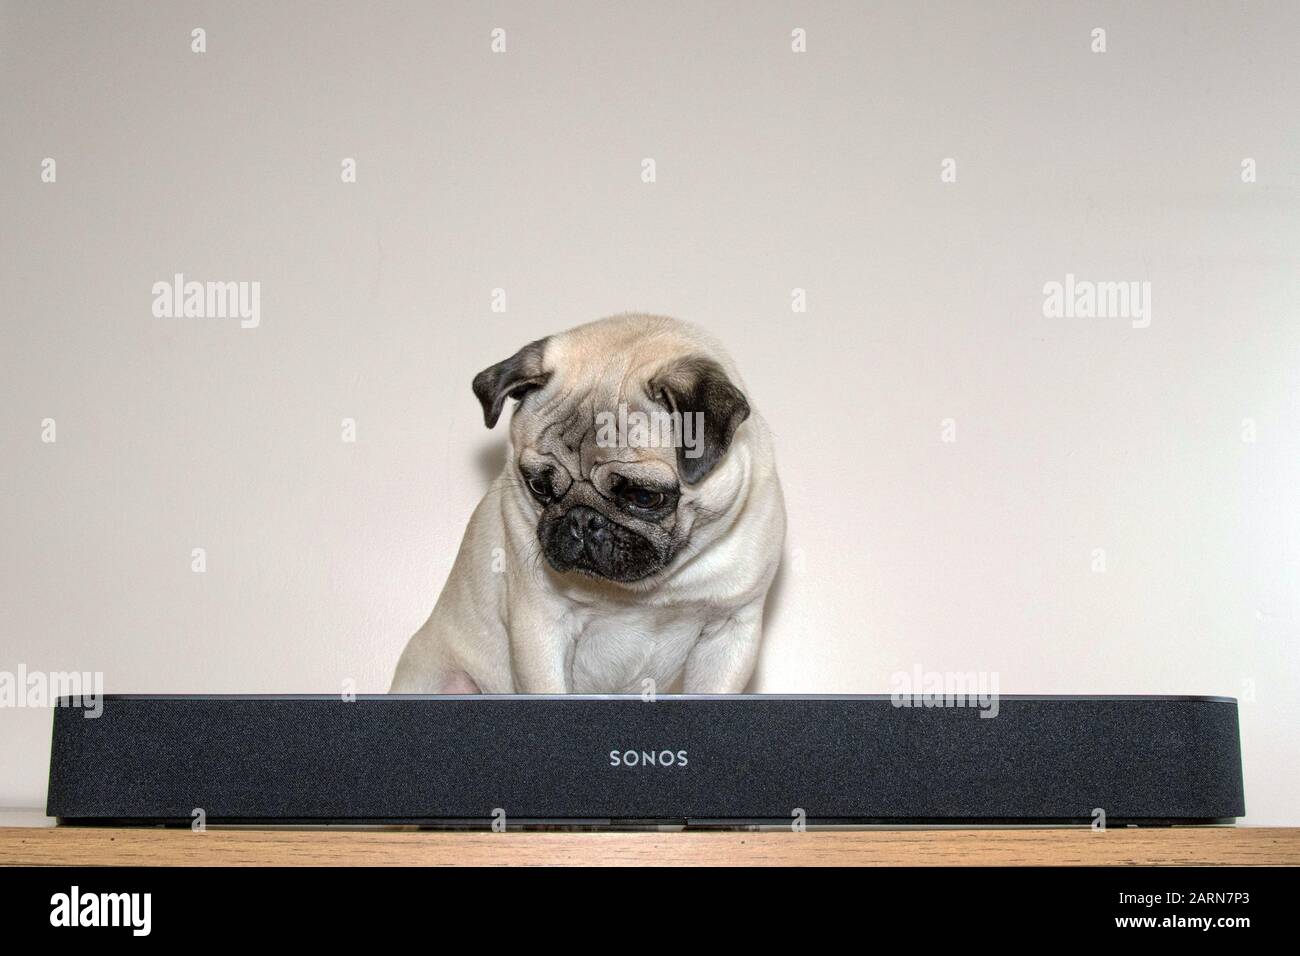 Pug dog sitting behind a Sonos beam sound bar against a light background Stock Photo